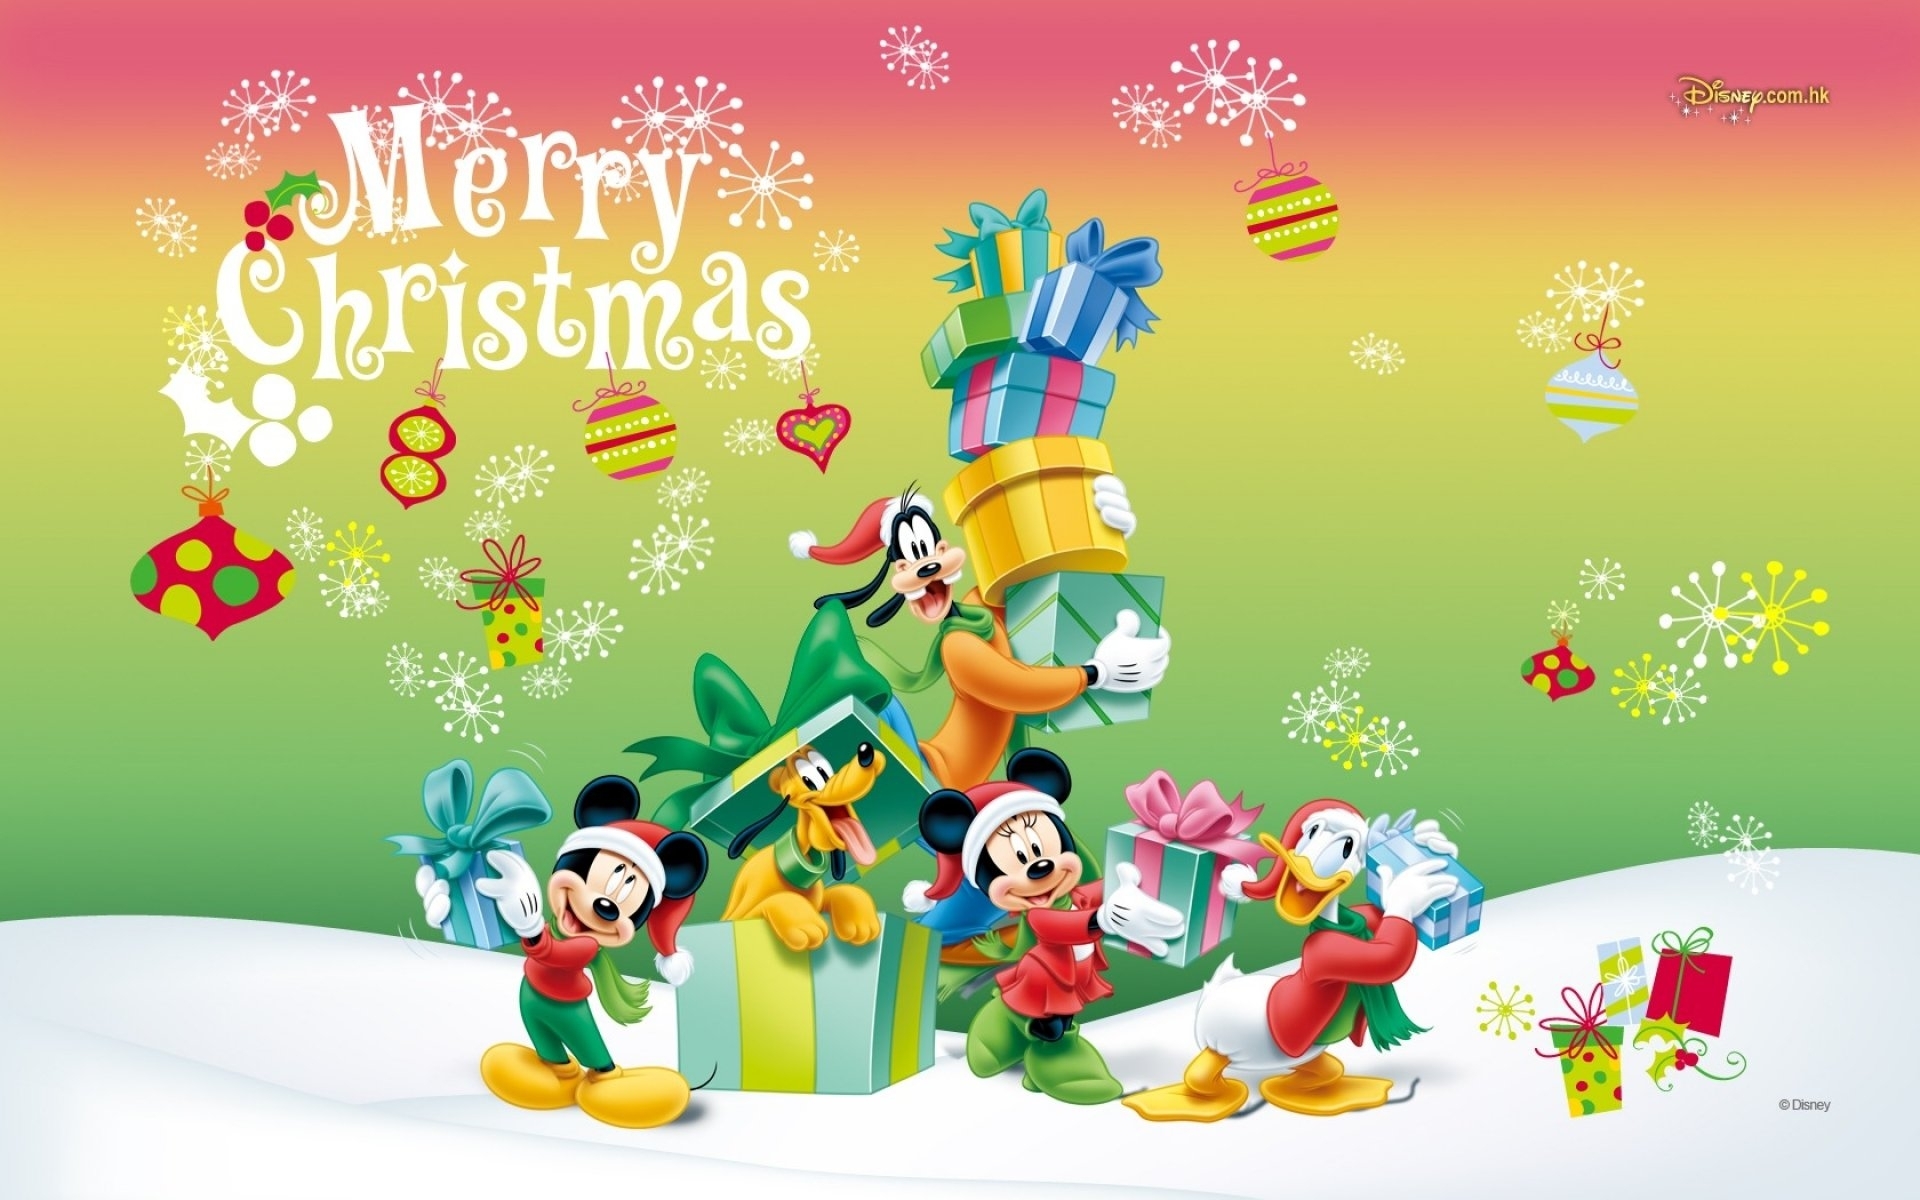 Immagini Natale Walt Disney.Disney In Tv Programmazione Completa Festivita Natalizie 2015 2016